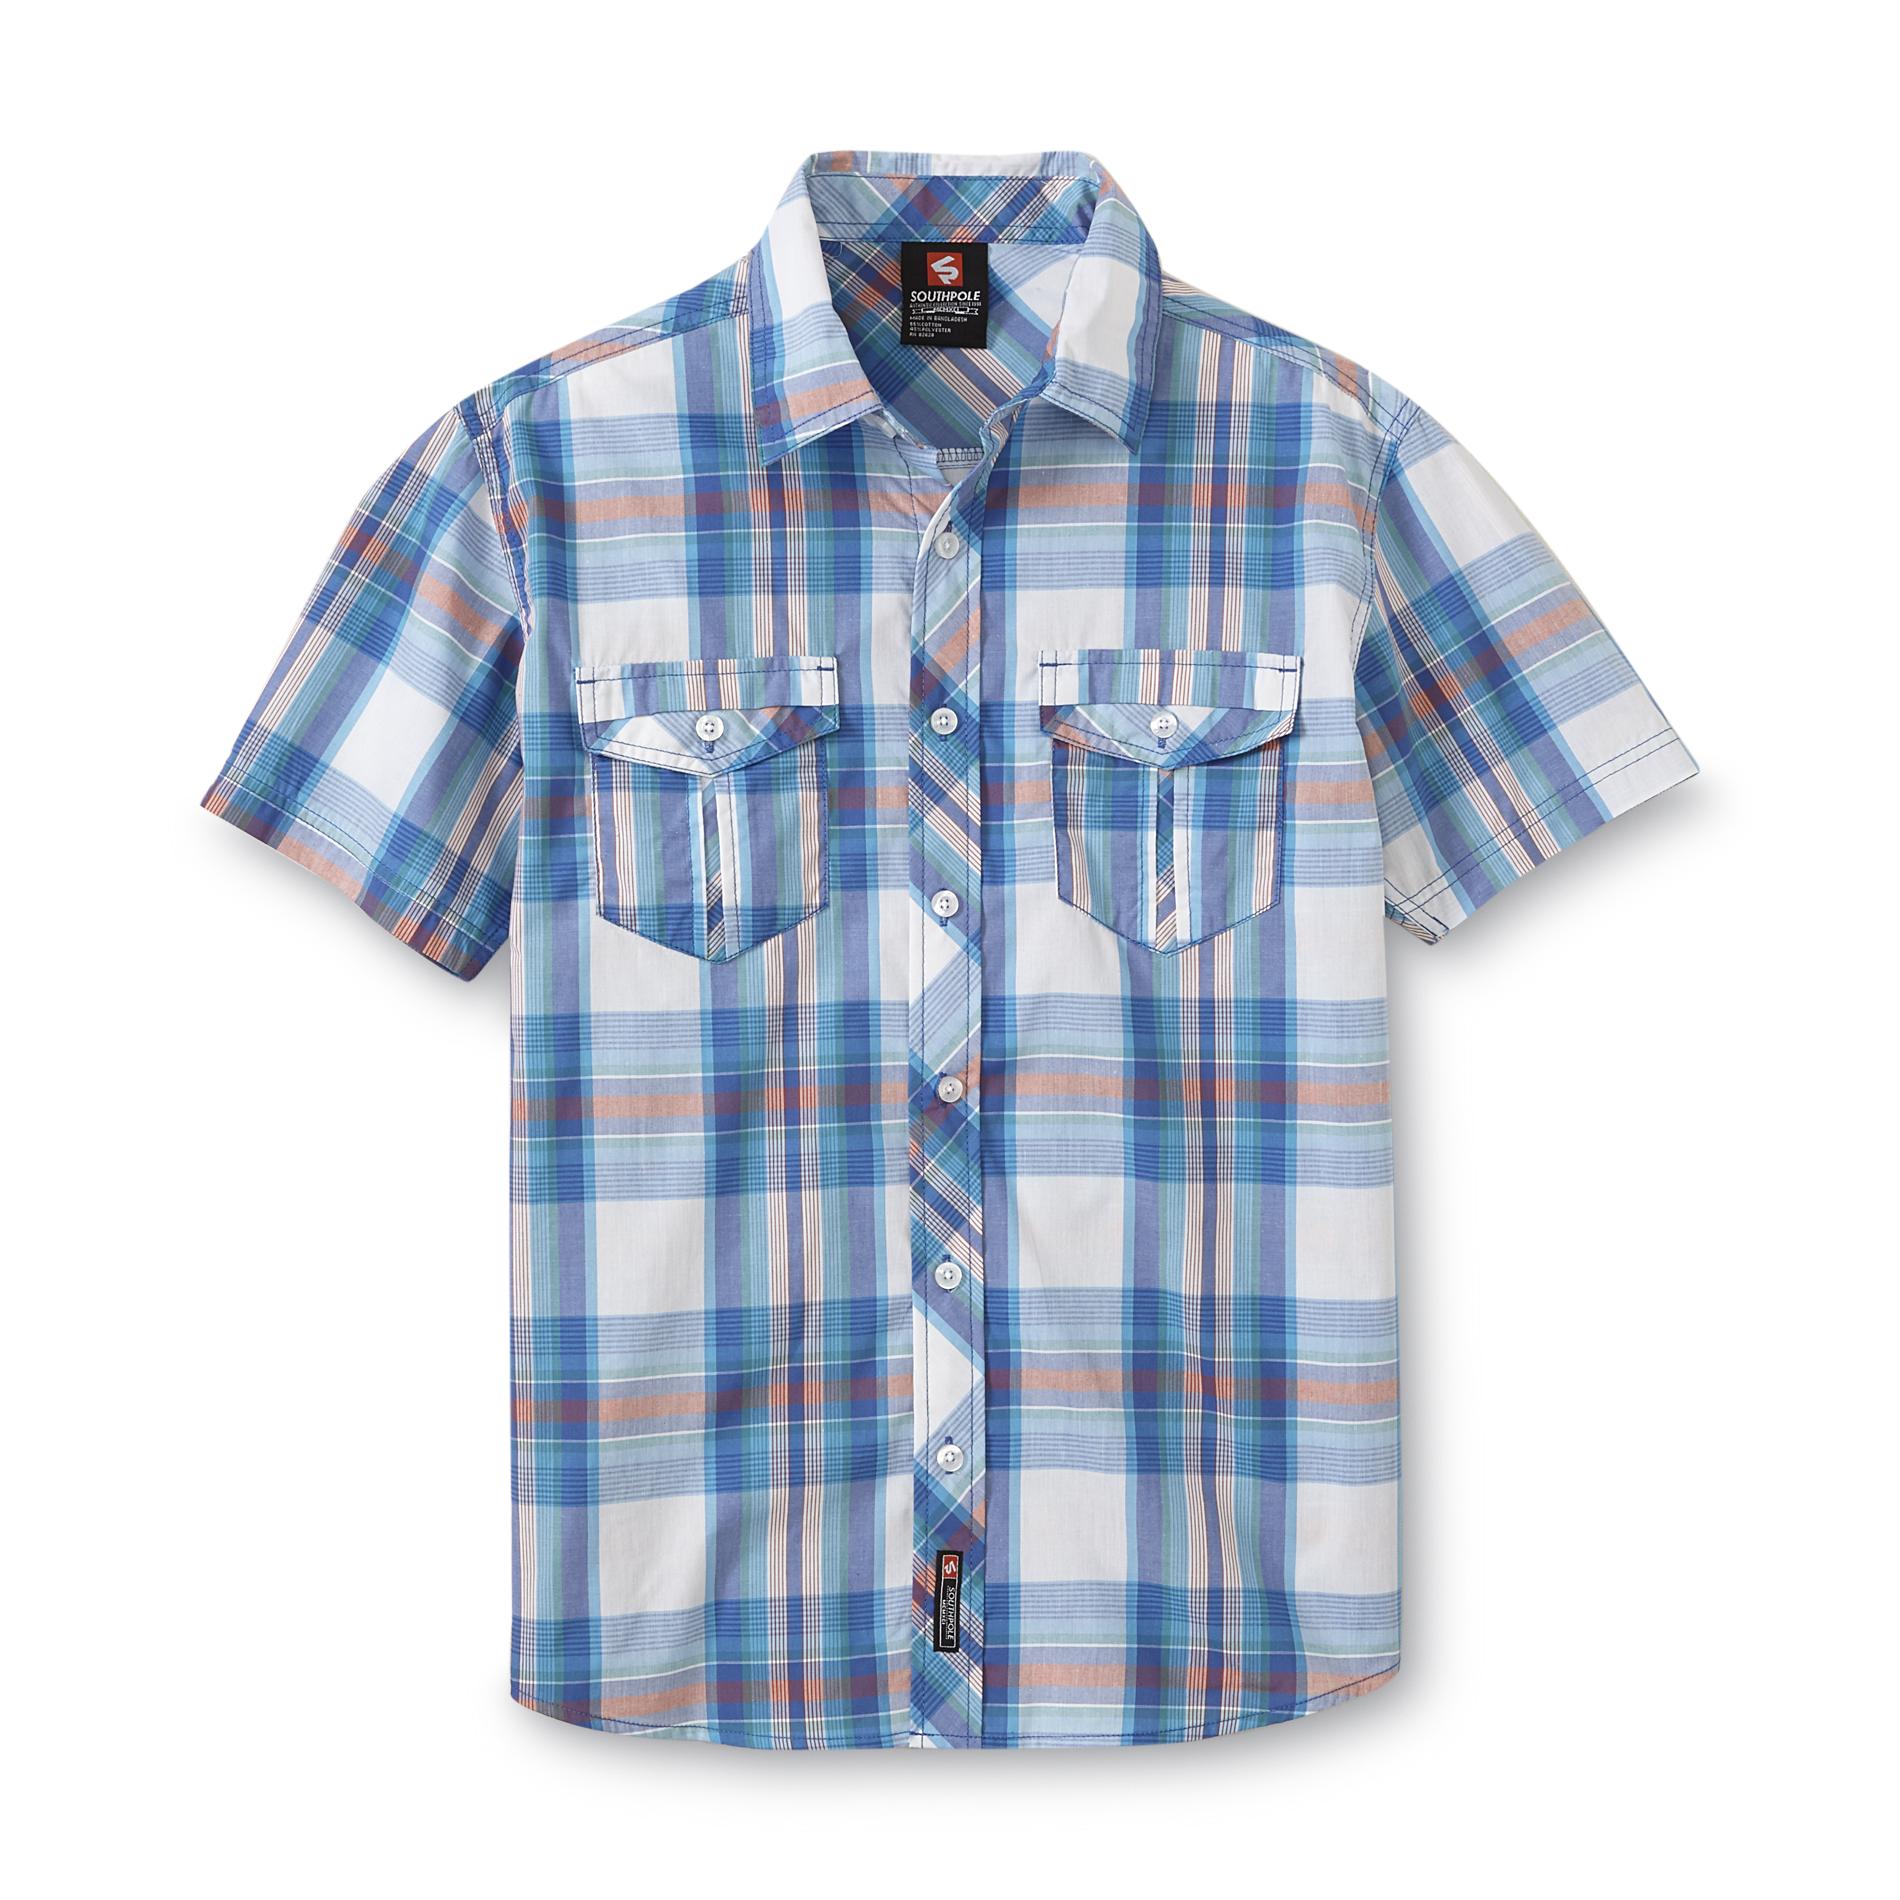 Southpole Young Men's Woven Shirt - Plaid